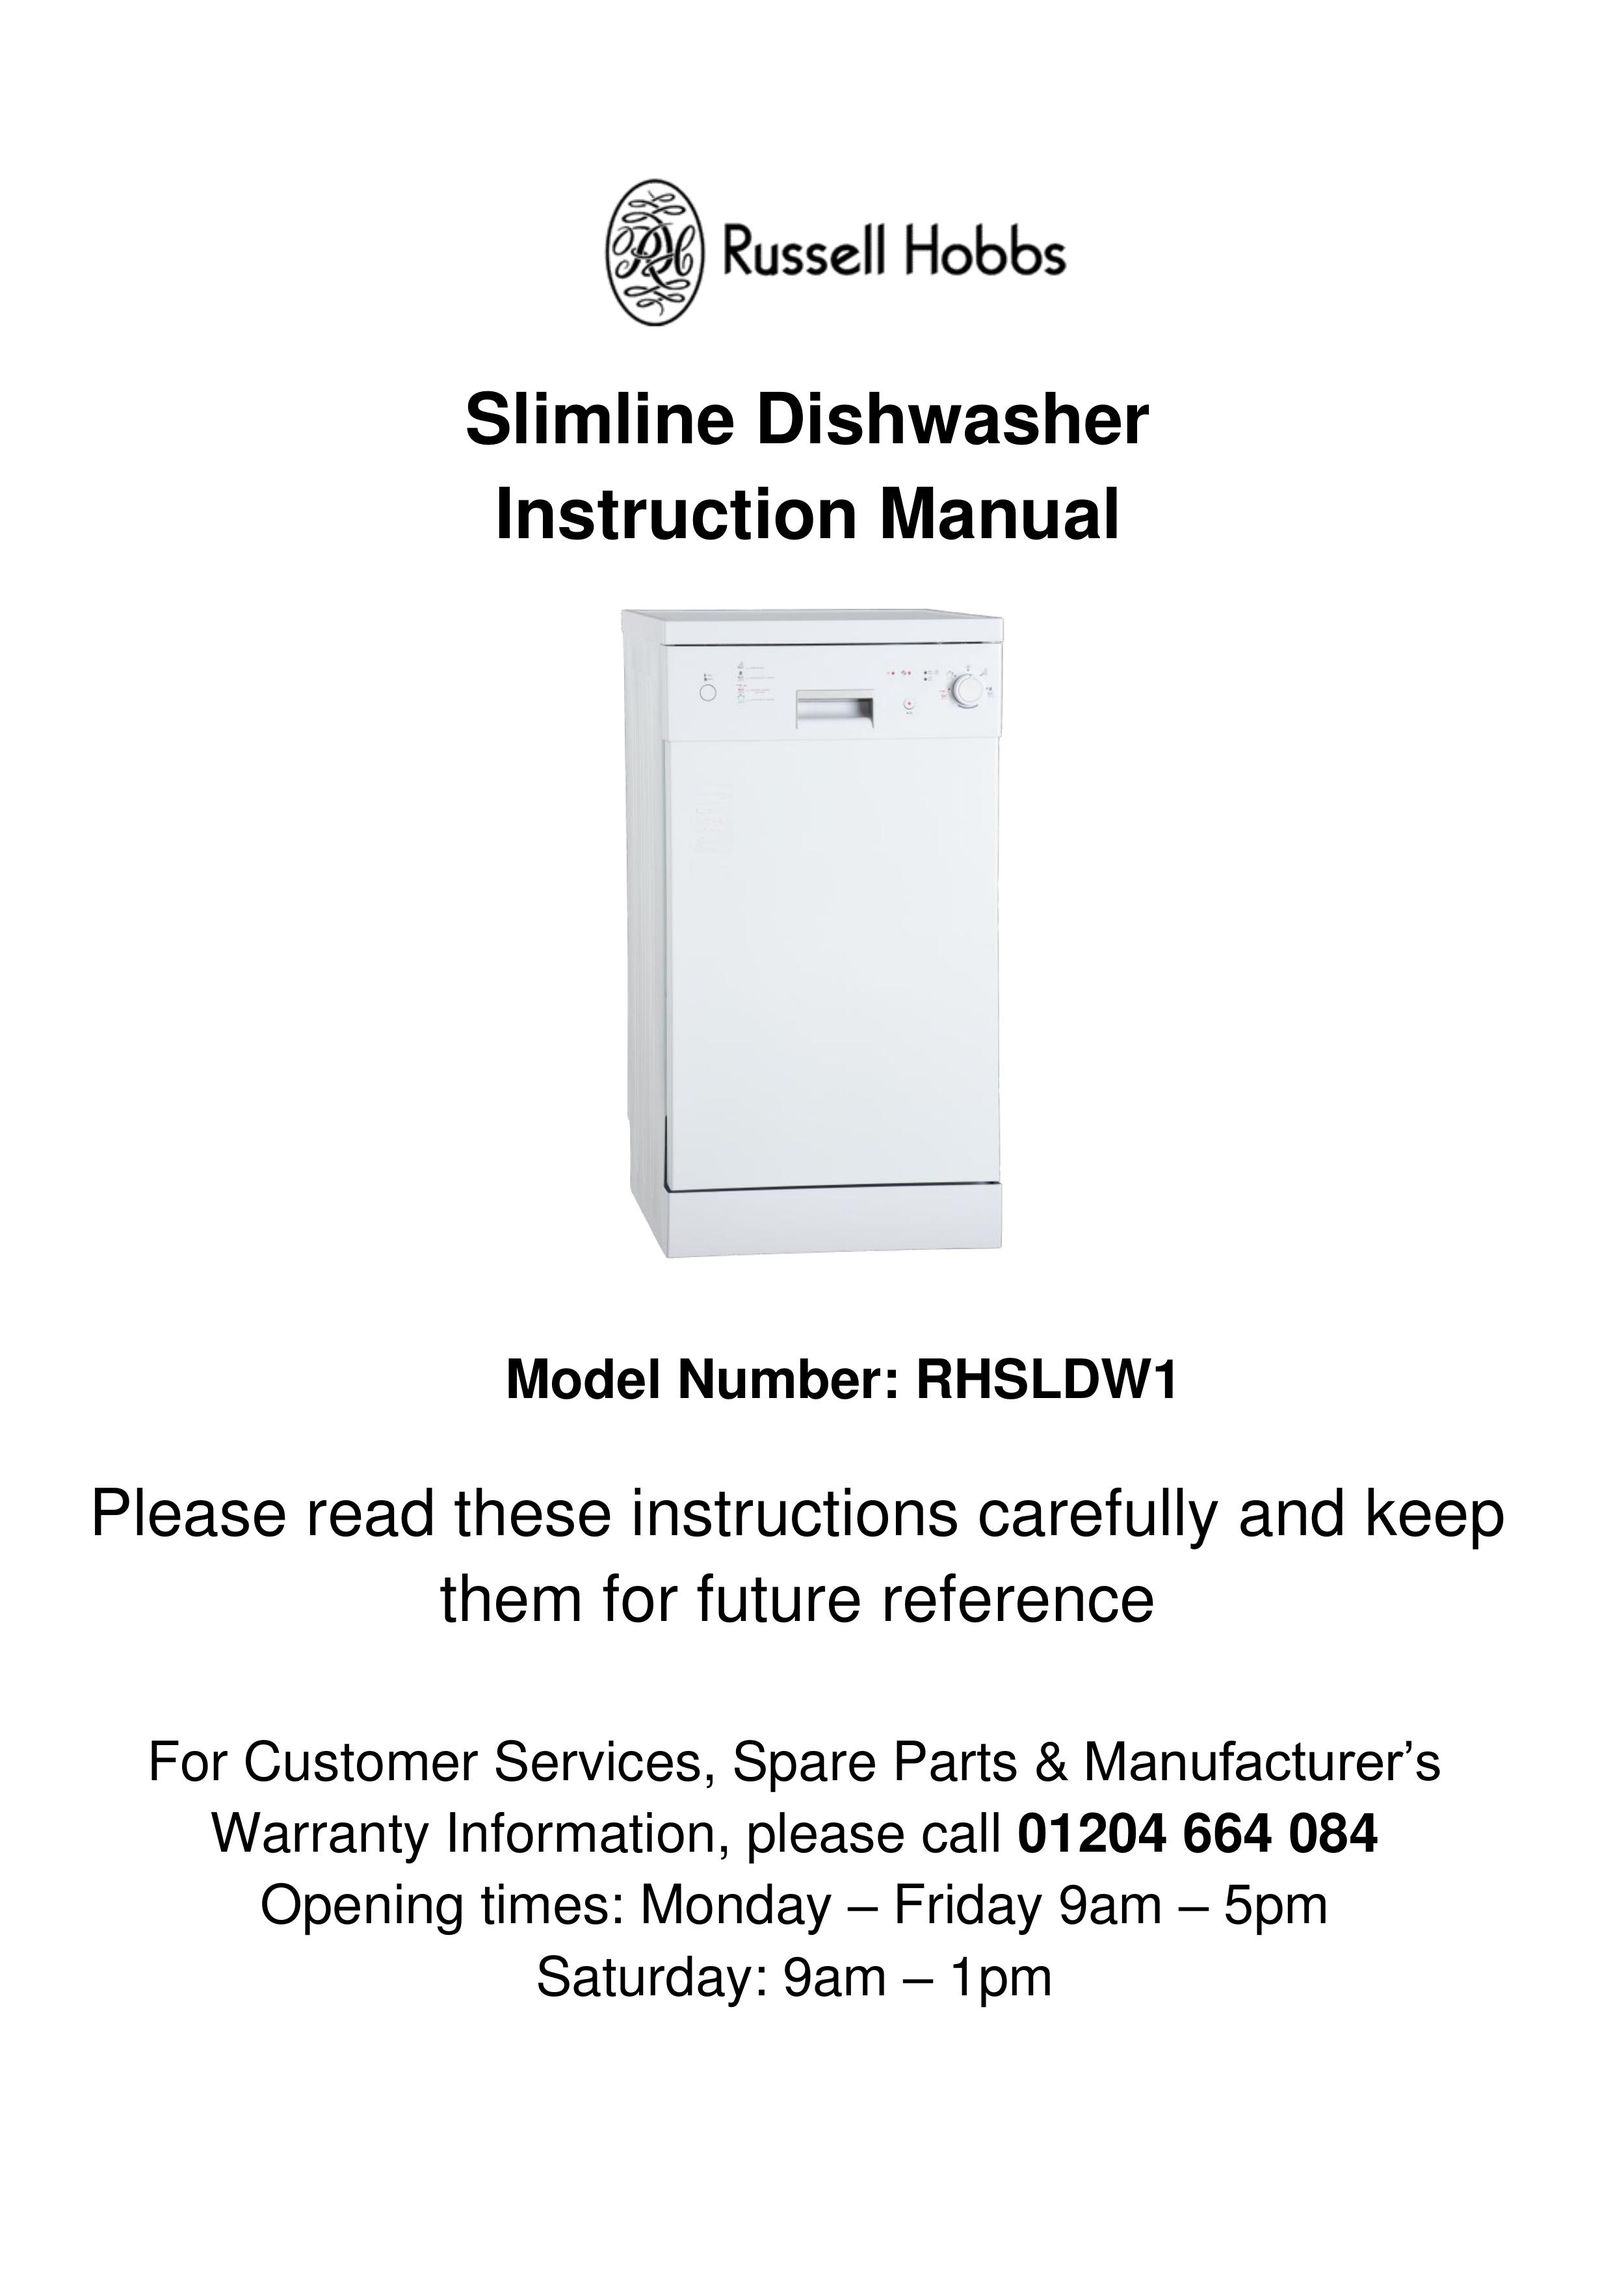 Russell Hobbs RHSLDW1 Dishwasher User Manual